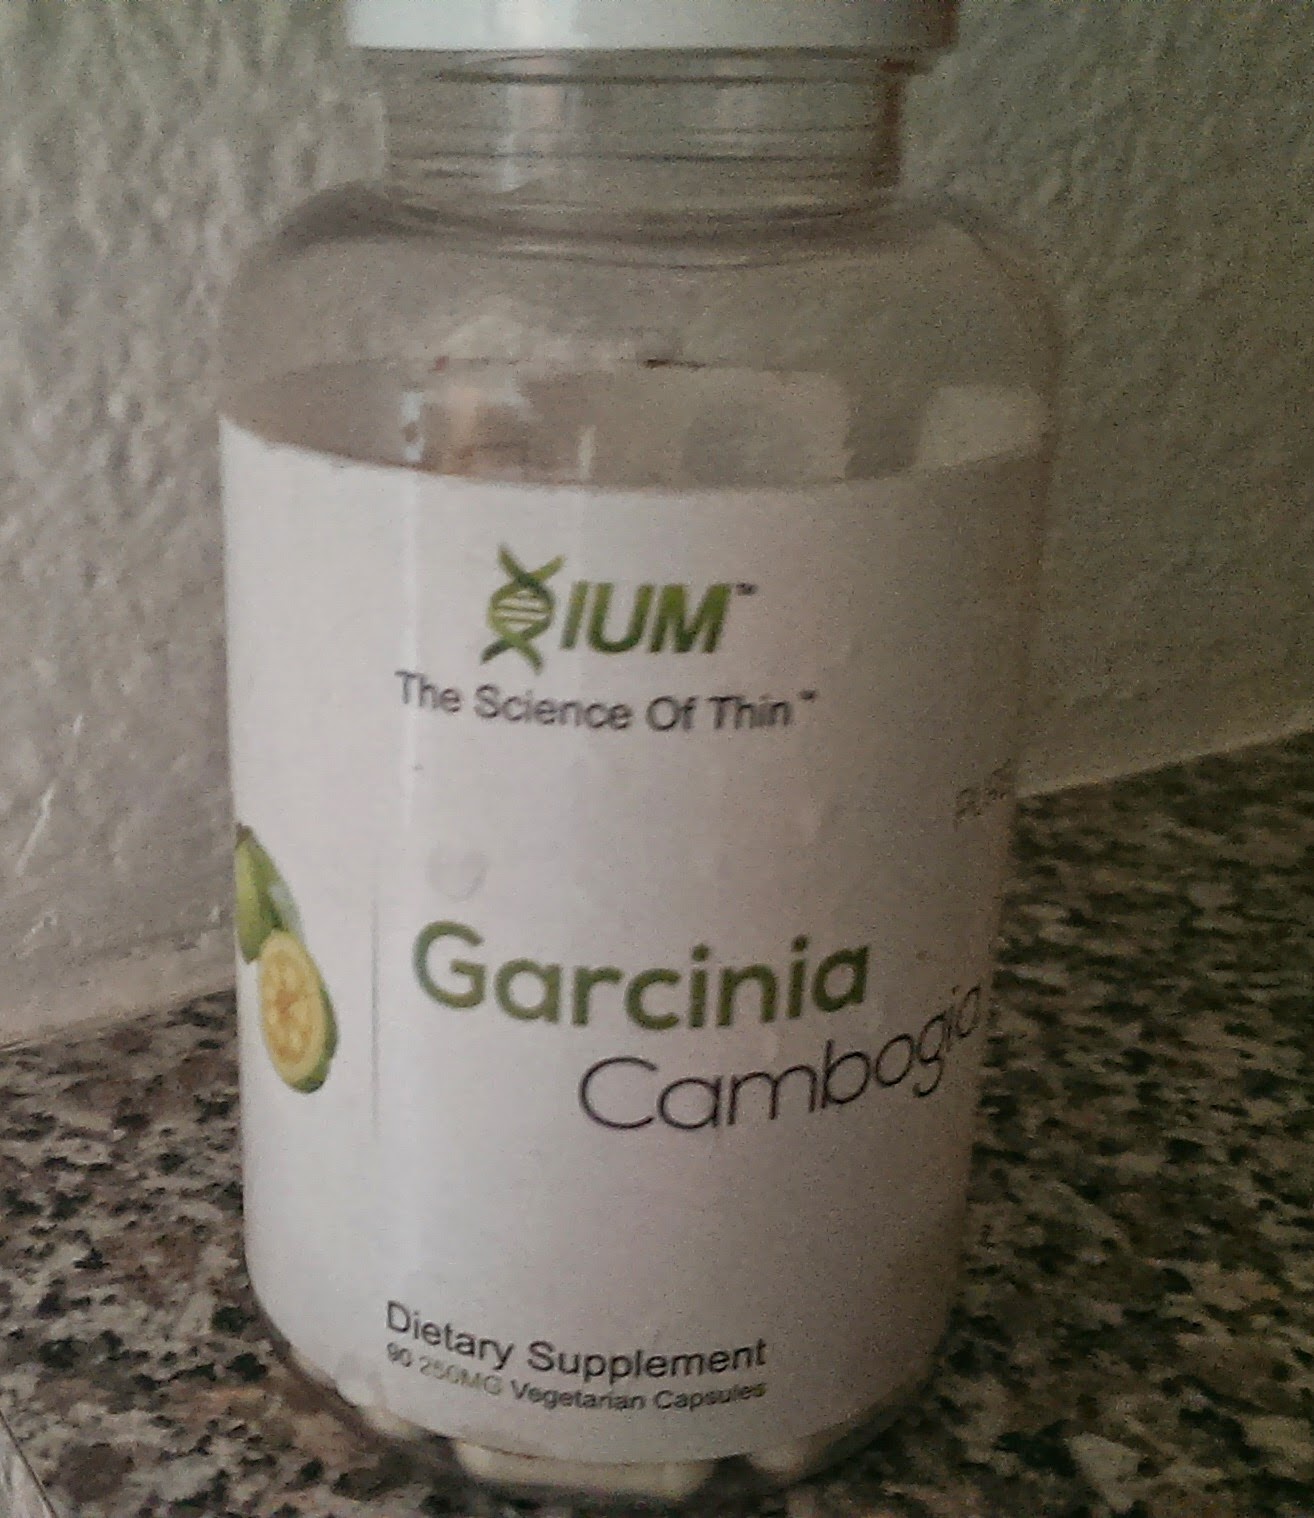 Cambogia Garcinia Cambogia 90 Capsules Pure Xium Weightloss - Weight Loss Pills USA